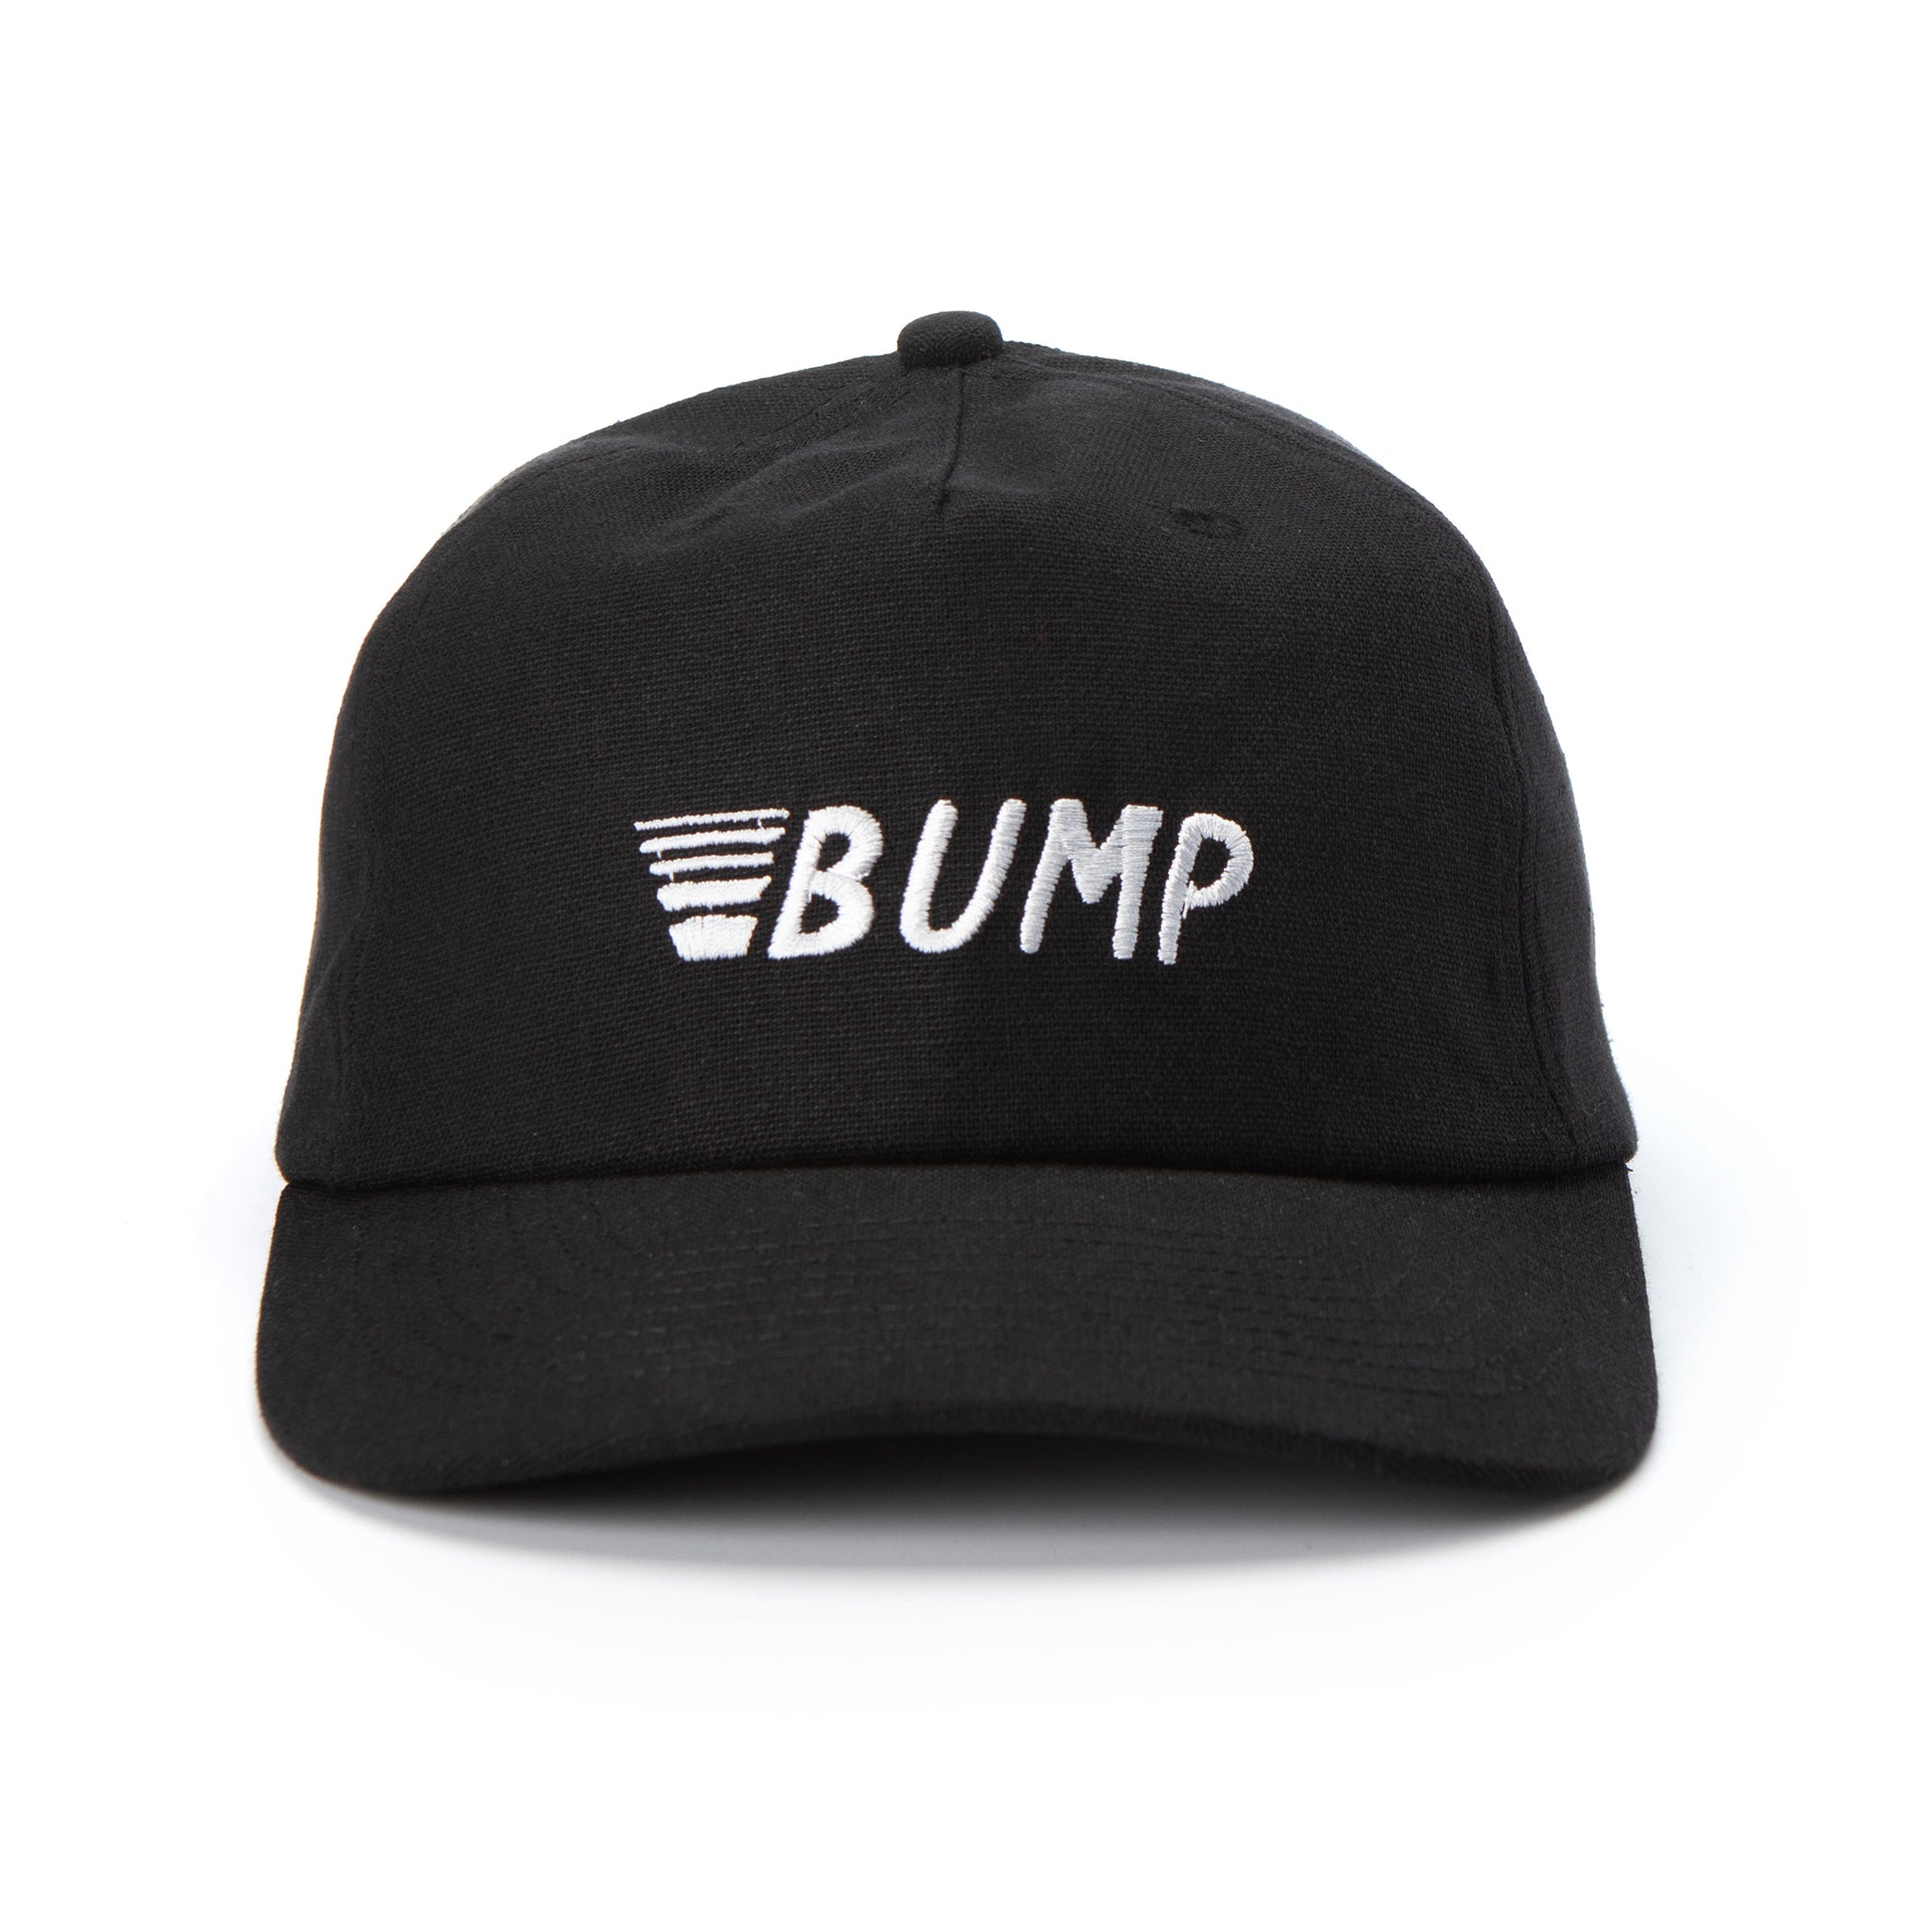 Bump Snapback